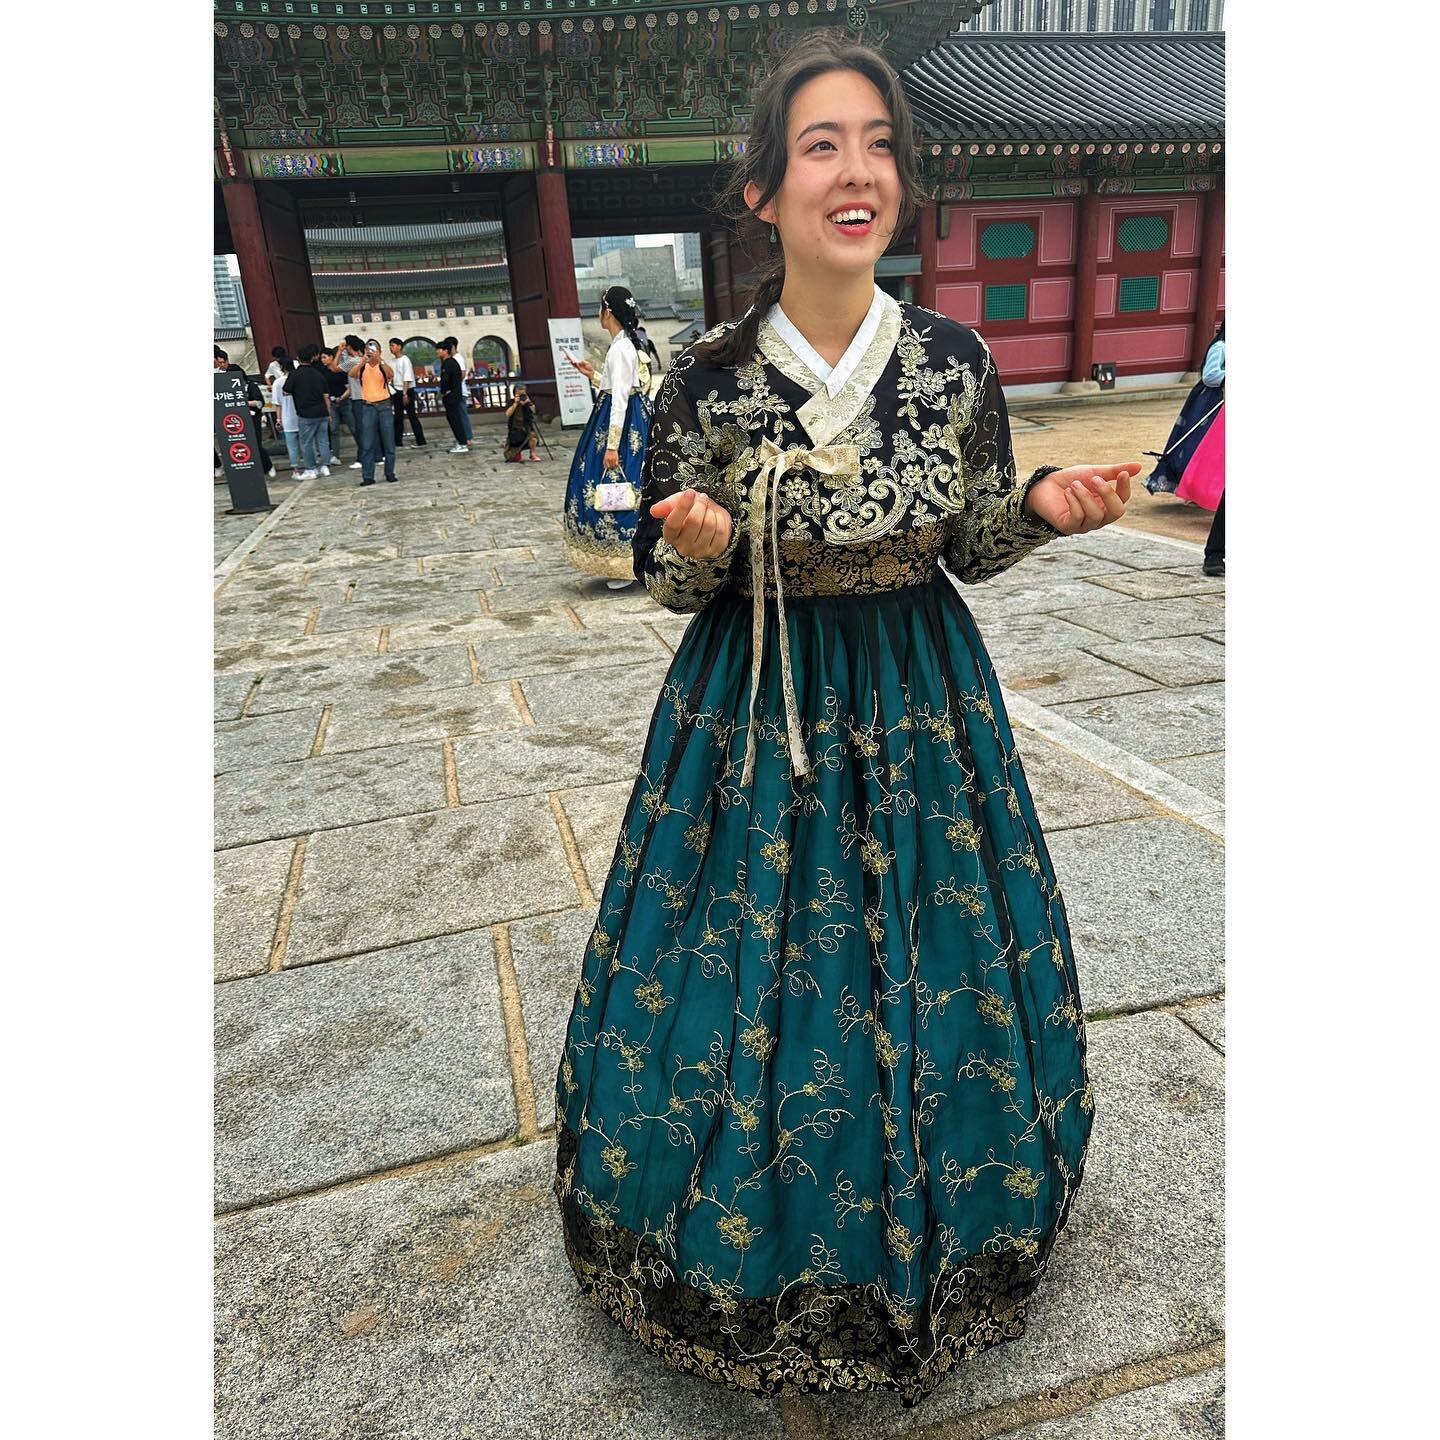 be a tourist, rent a hanbok, walk around a palace in extreme heat 🥵🙌✨